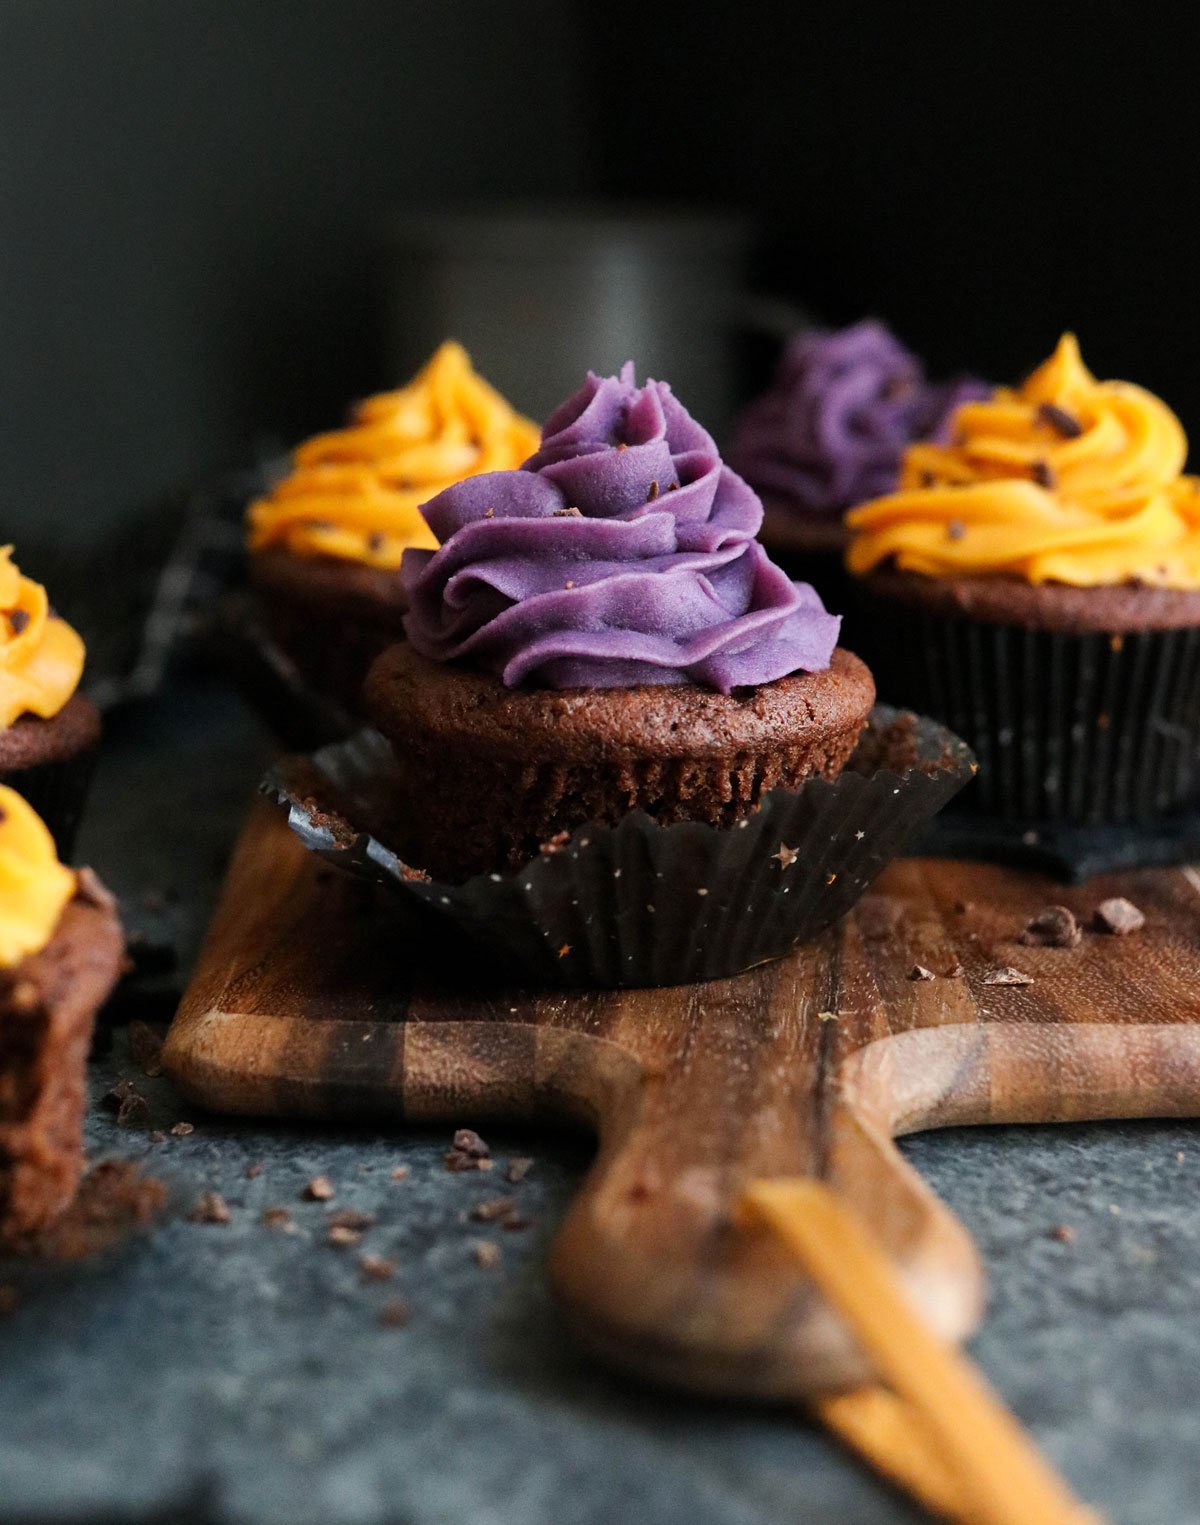 purple frosting on chocolate cupcake